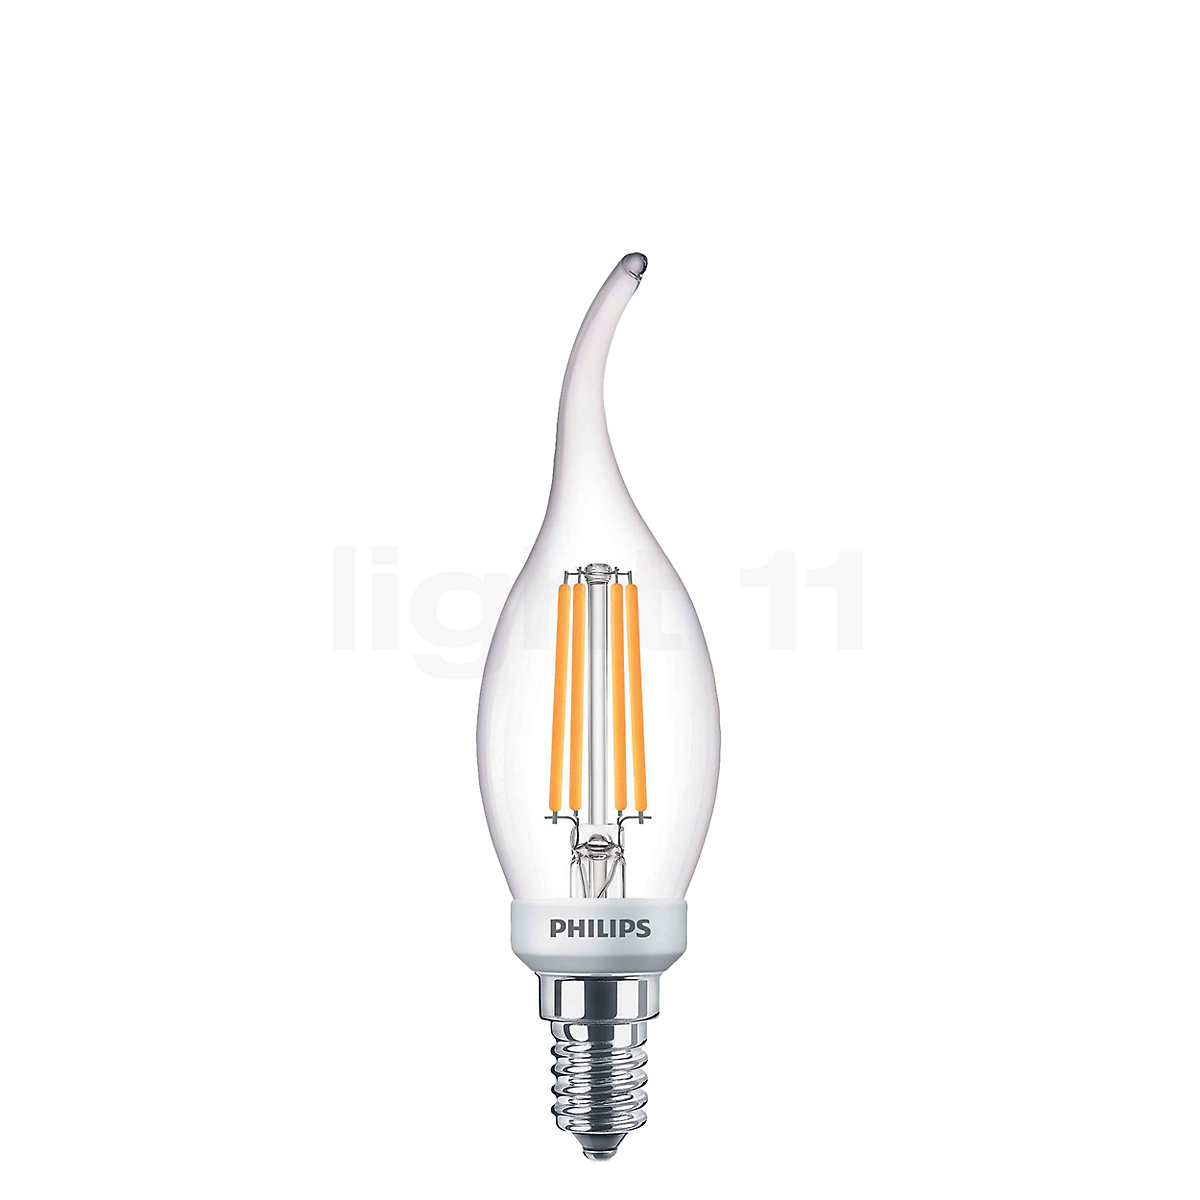 Niet doen afschaffen pk Buy Philips CW35-dim 5W/c 927, E14 Filament LED at